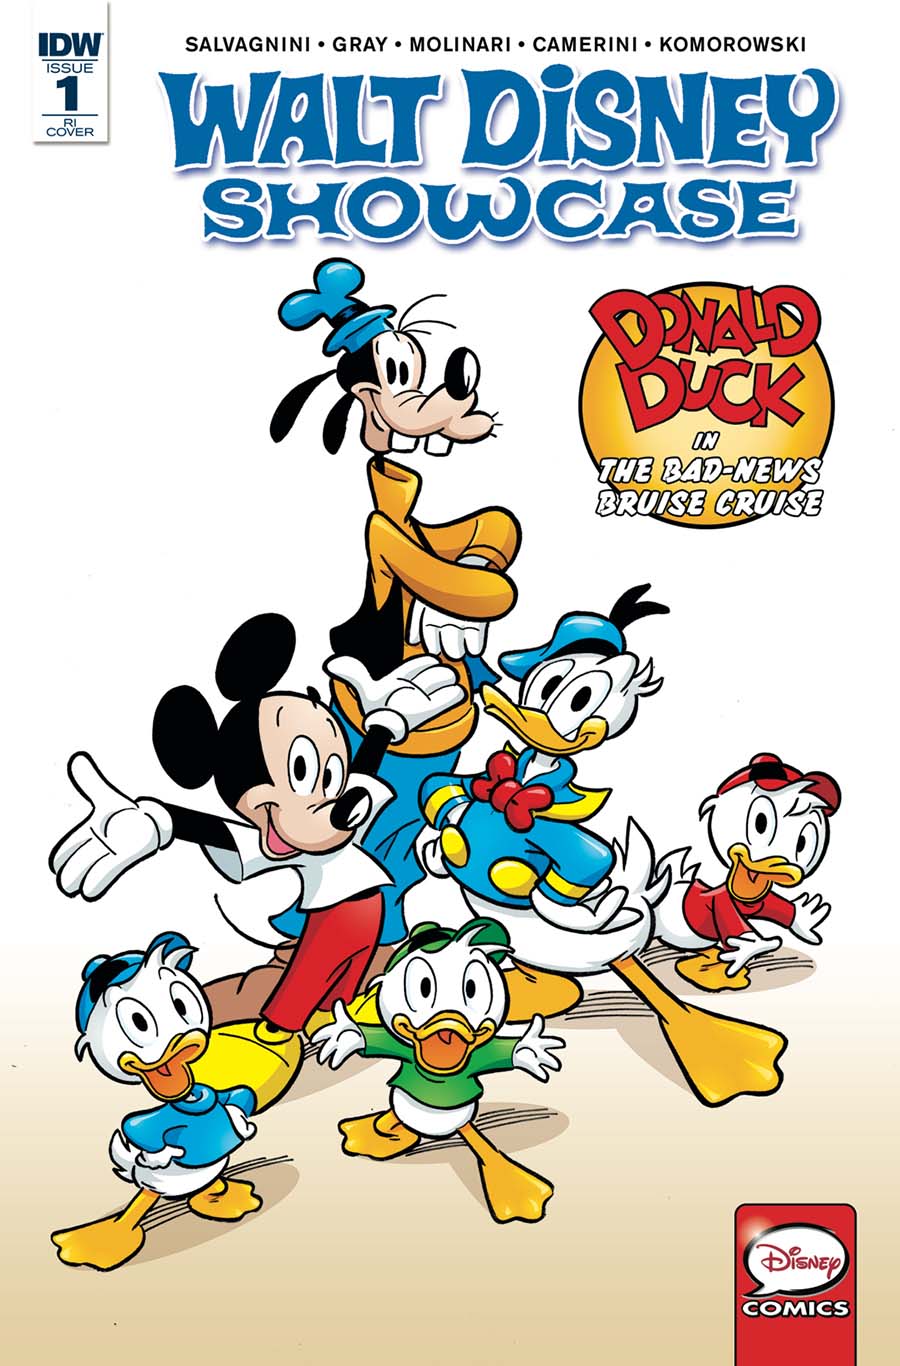 Walt Disney Showcase Vol 2 #1 Donald Duck Cover C Incentive Marco Mazzarello Variant Cover